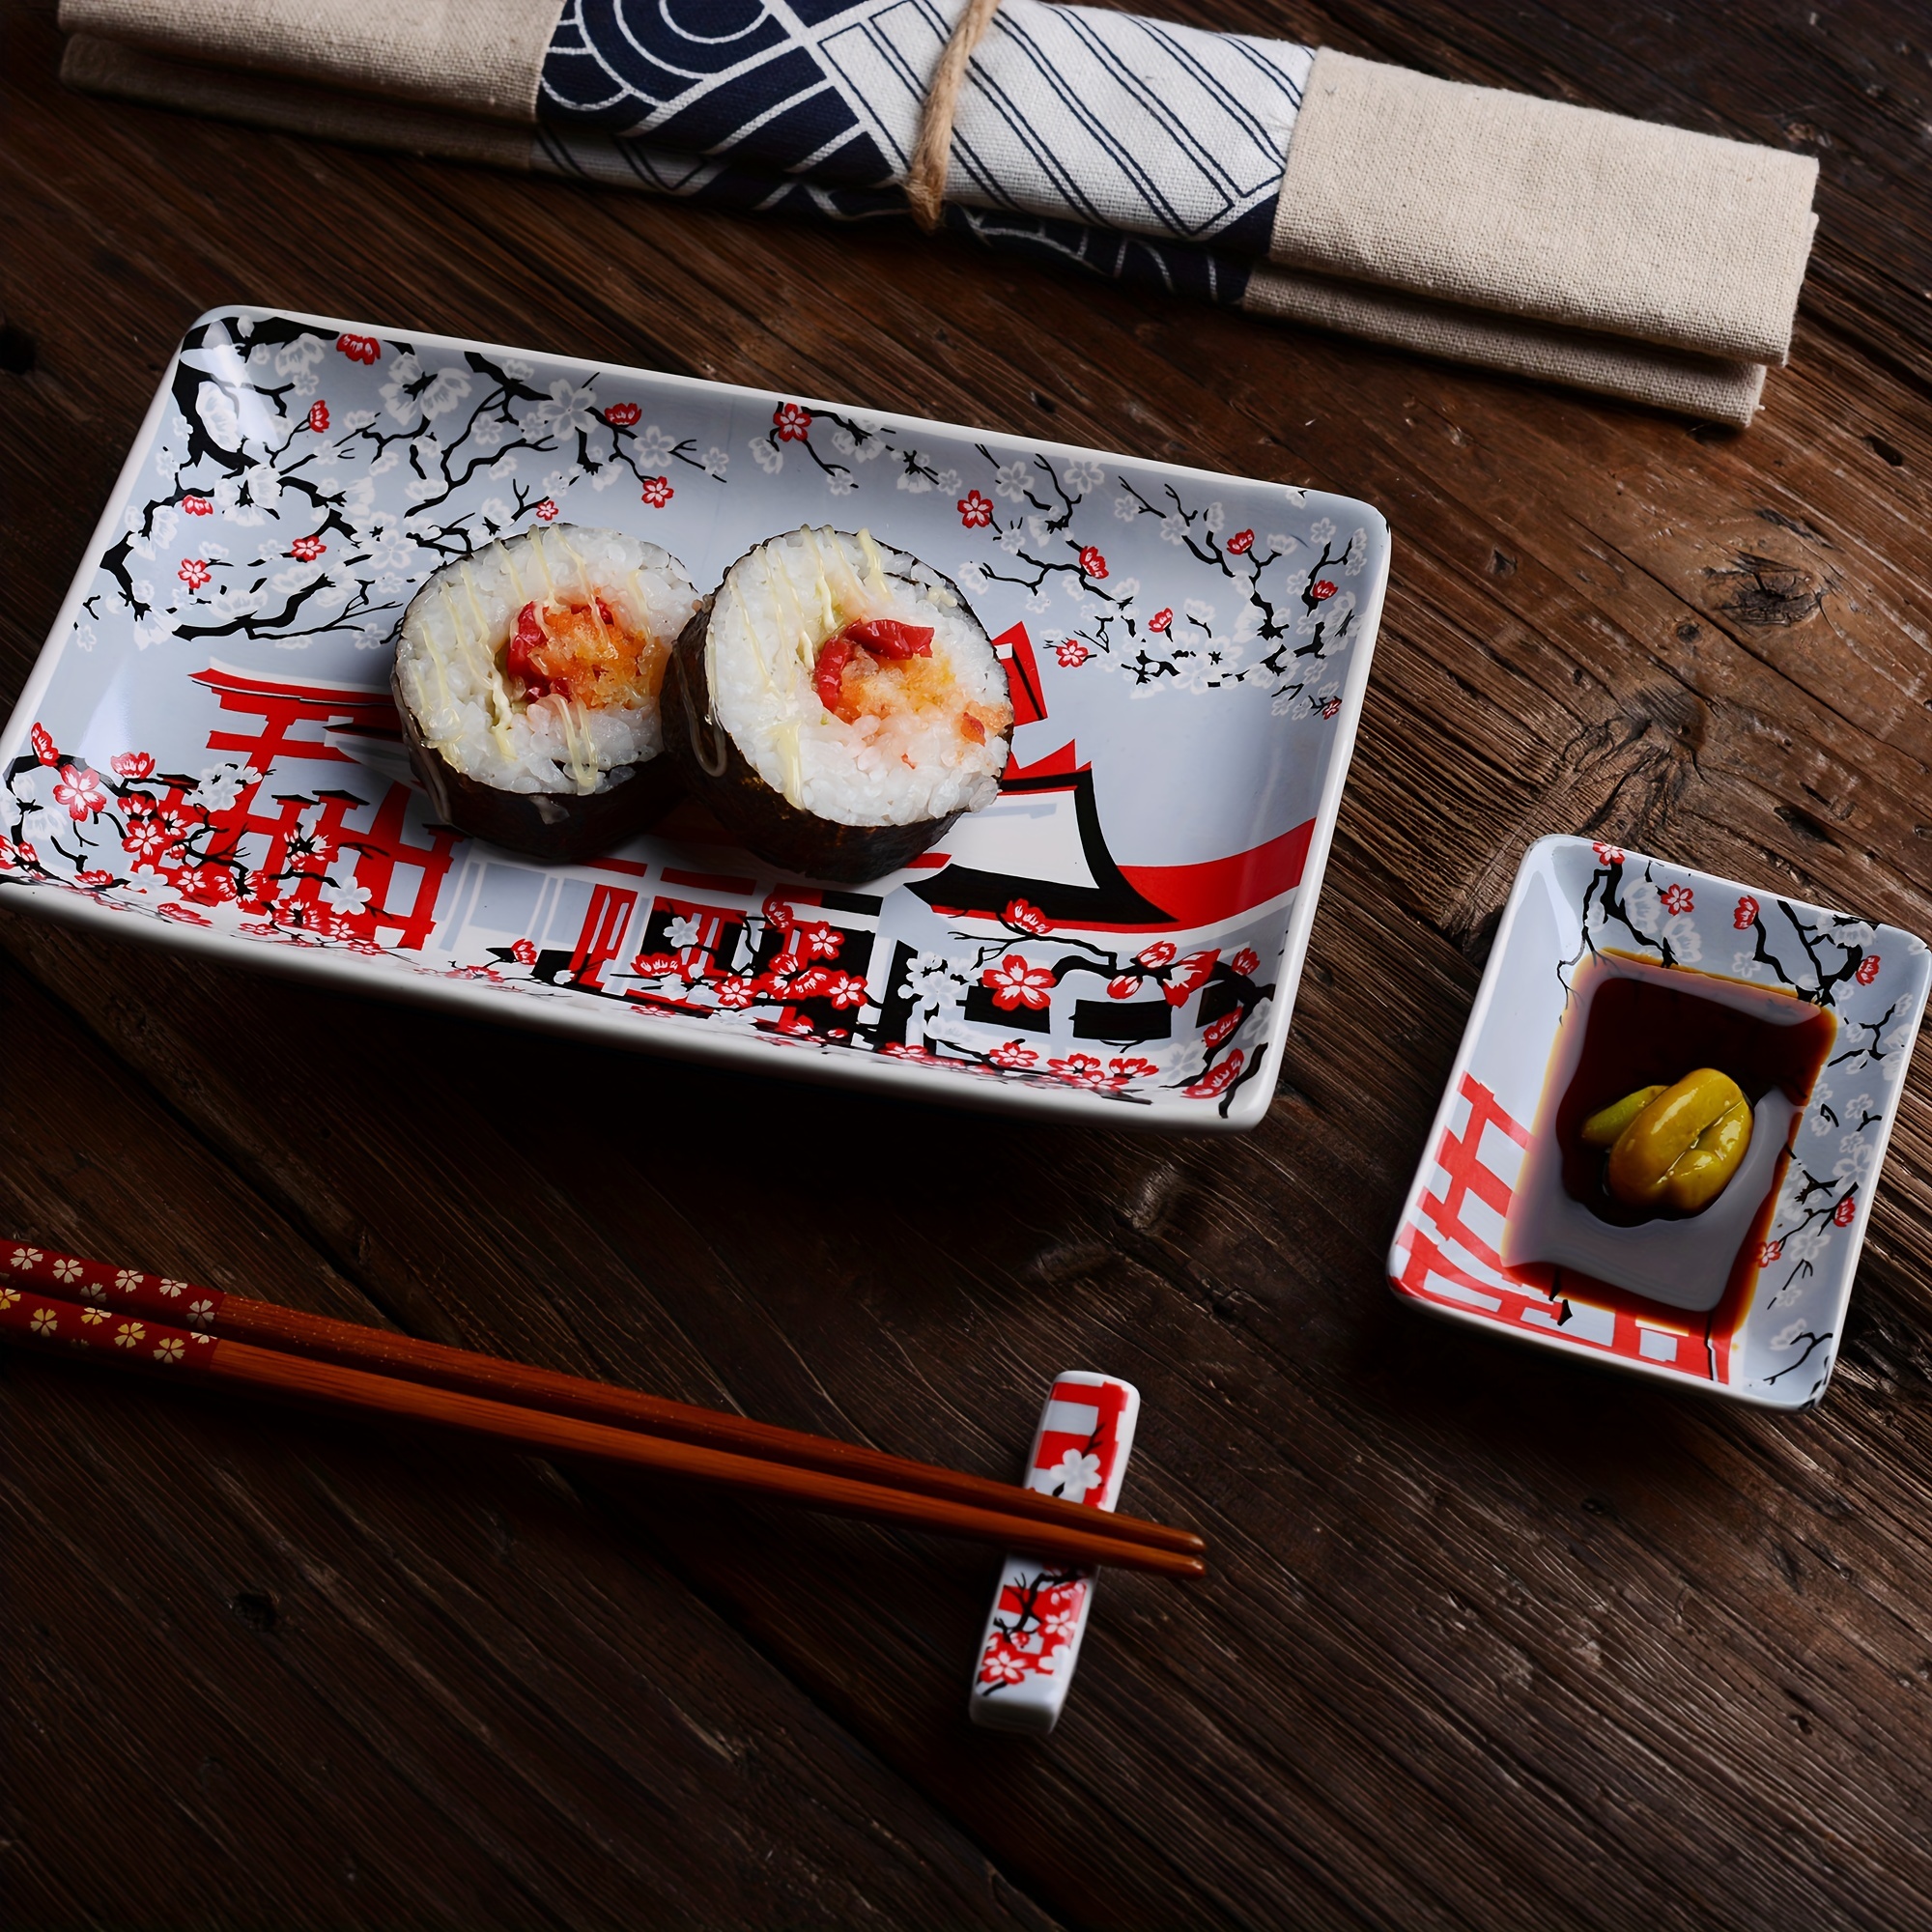 Artcome 10 Pcs Japanese Style Ceramic Sushi Plate Dinnerware Set for  Wedding Housewarming - 2 Sushi Plates, 2 Sauce Dishes, 2 Snack Bowl, 2  Pairs of Chopsticks, 2 Chopsticks Holders 